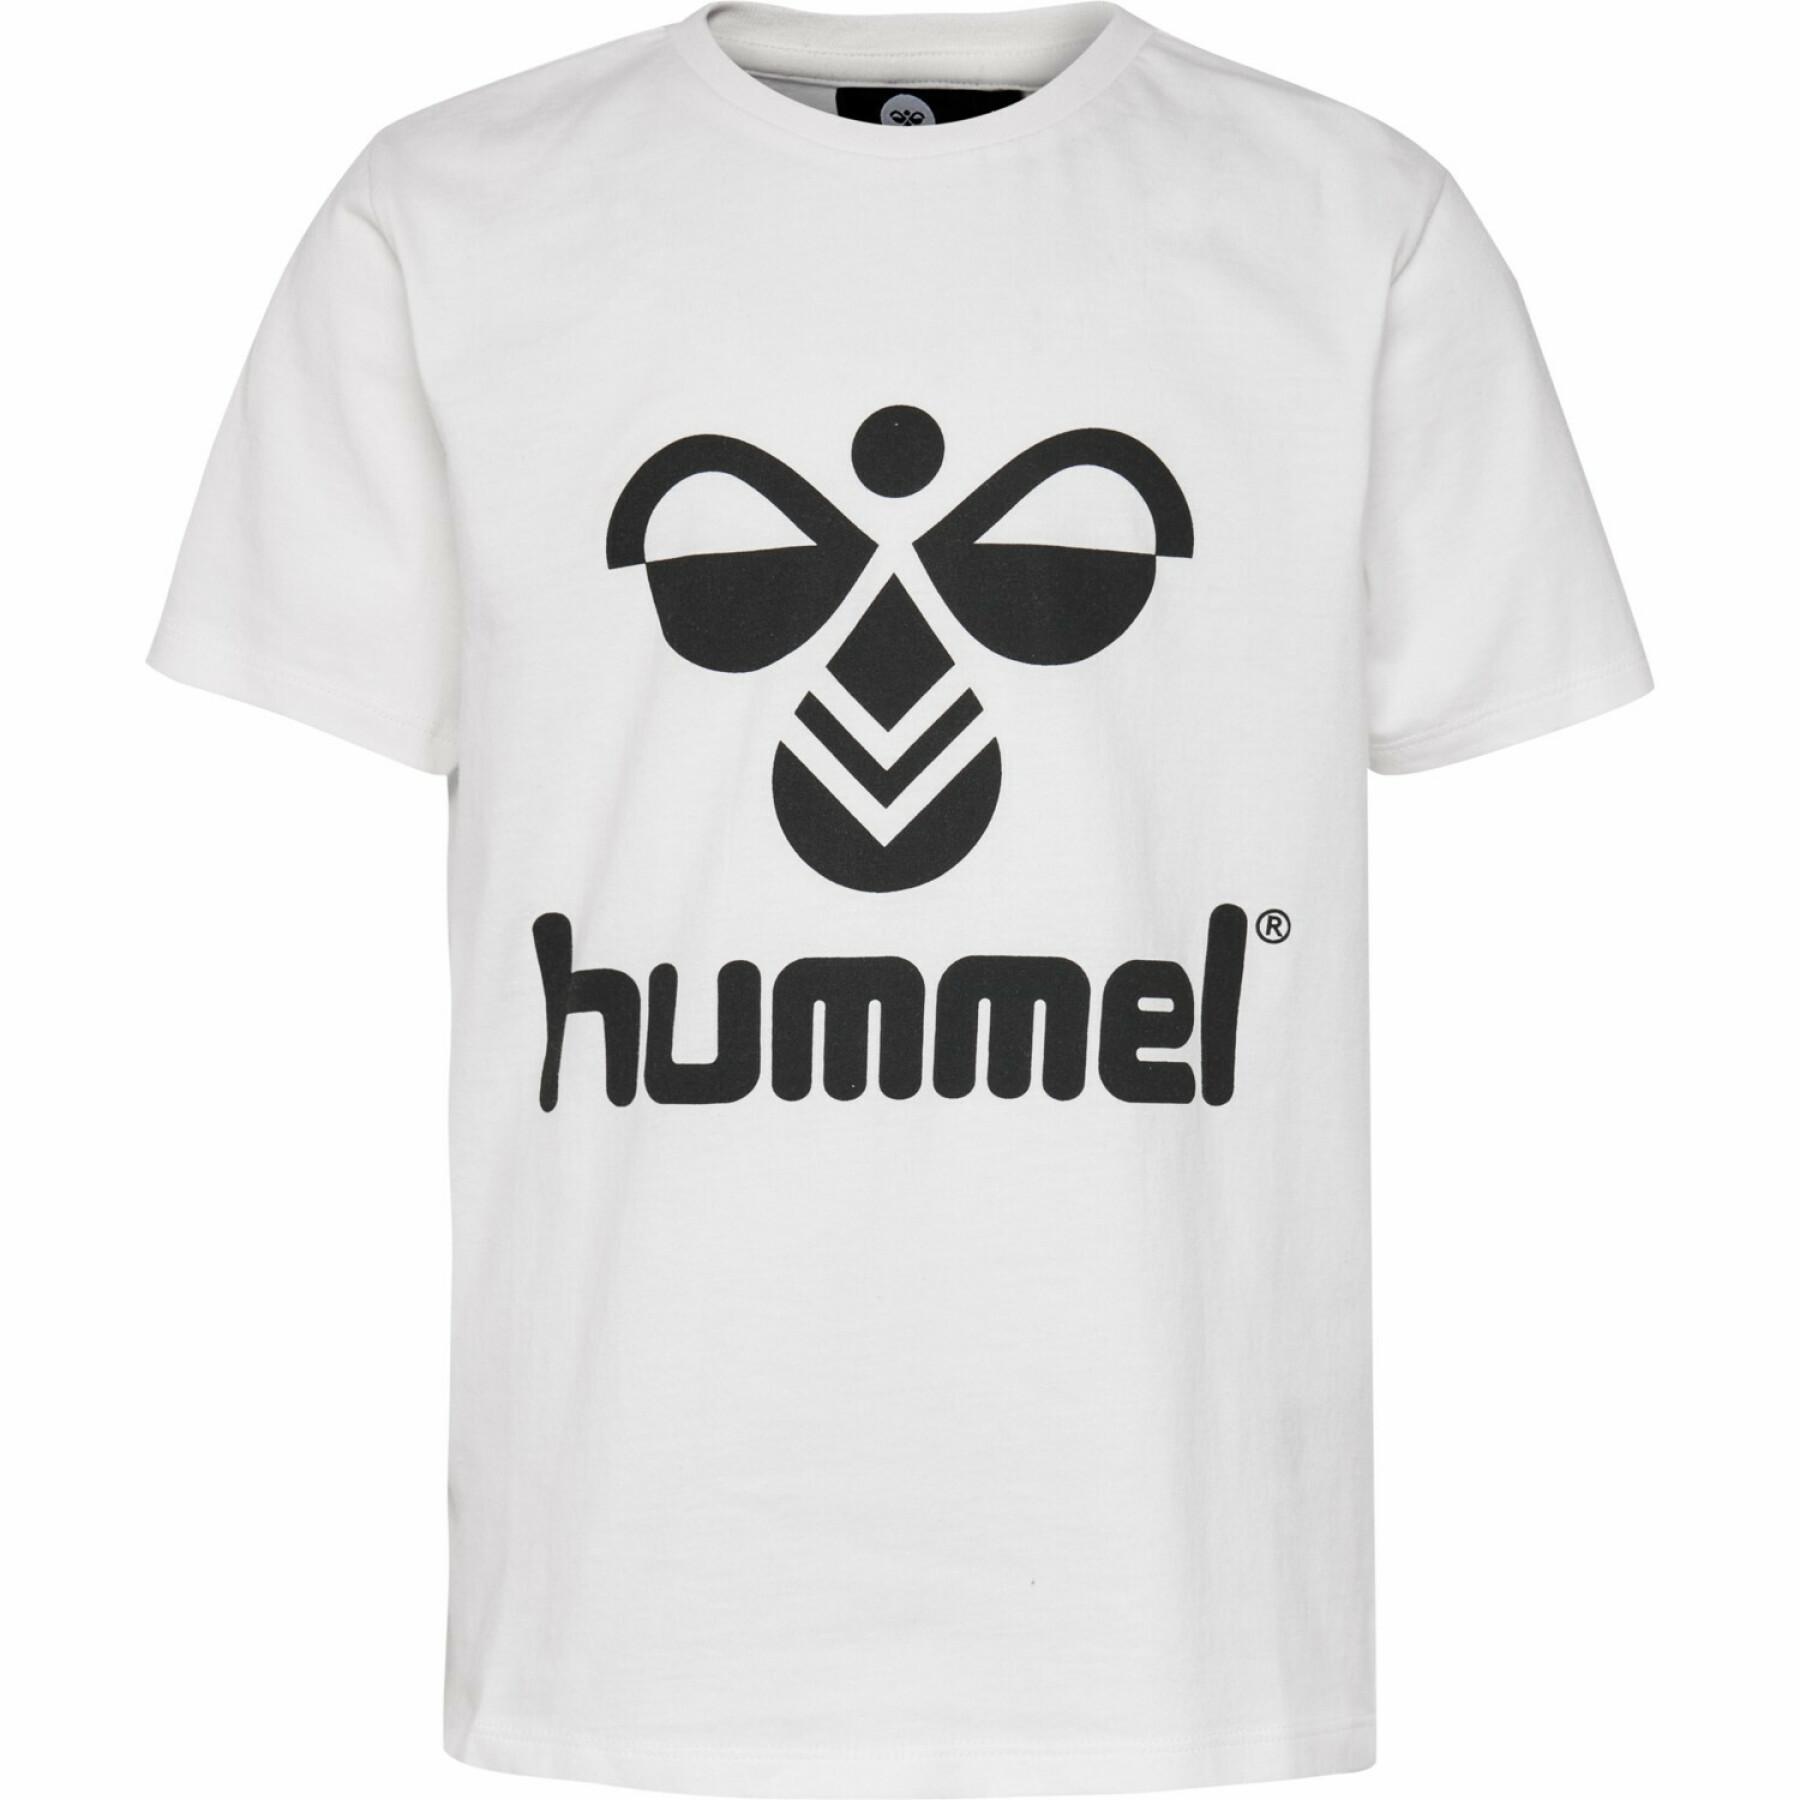 Kid\'s T-shirt Hummel et - - - hmltres Volleyball wear T-shirts Women\'s wear shirts volleyball polo